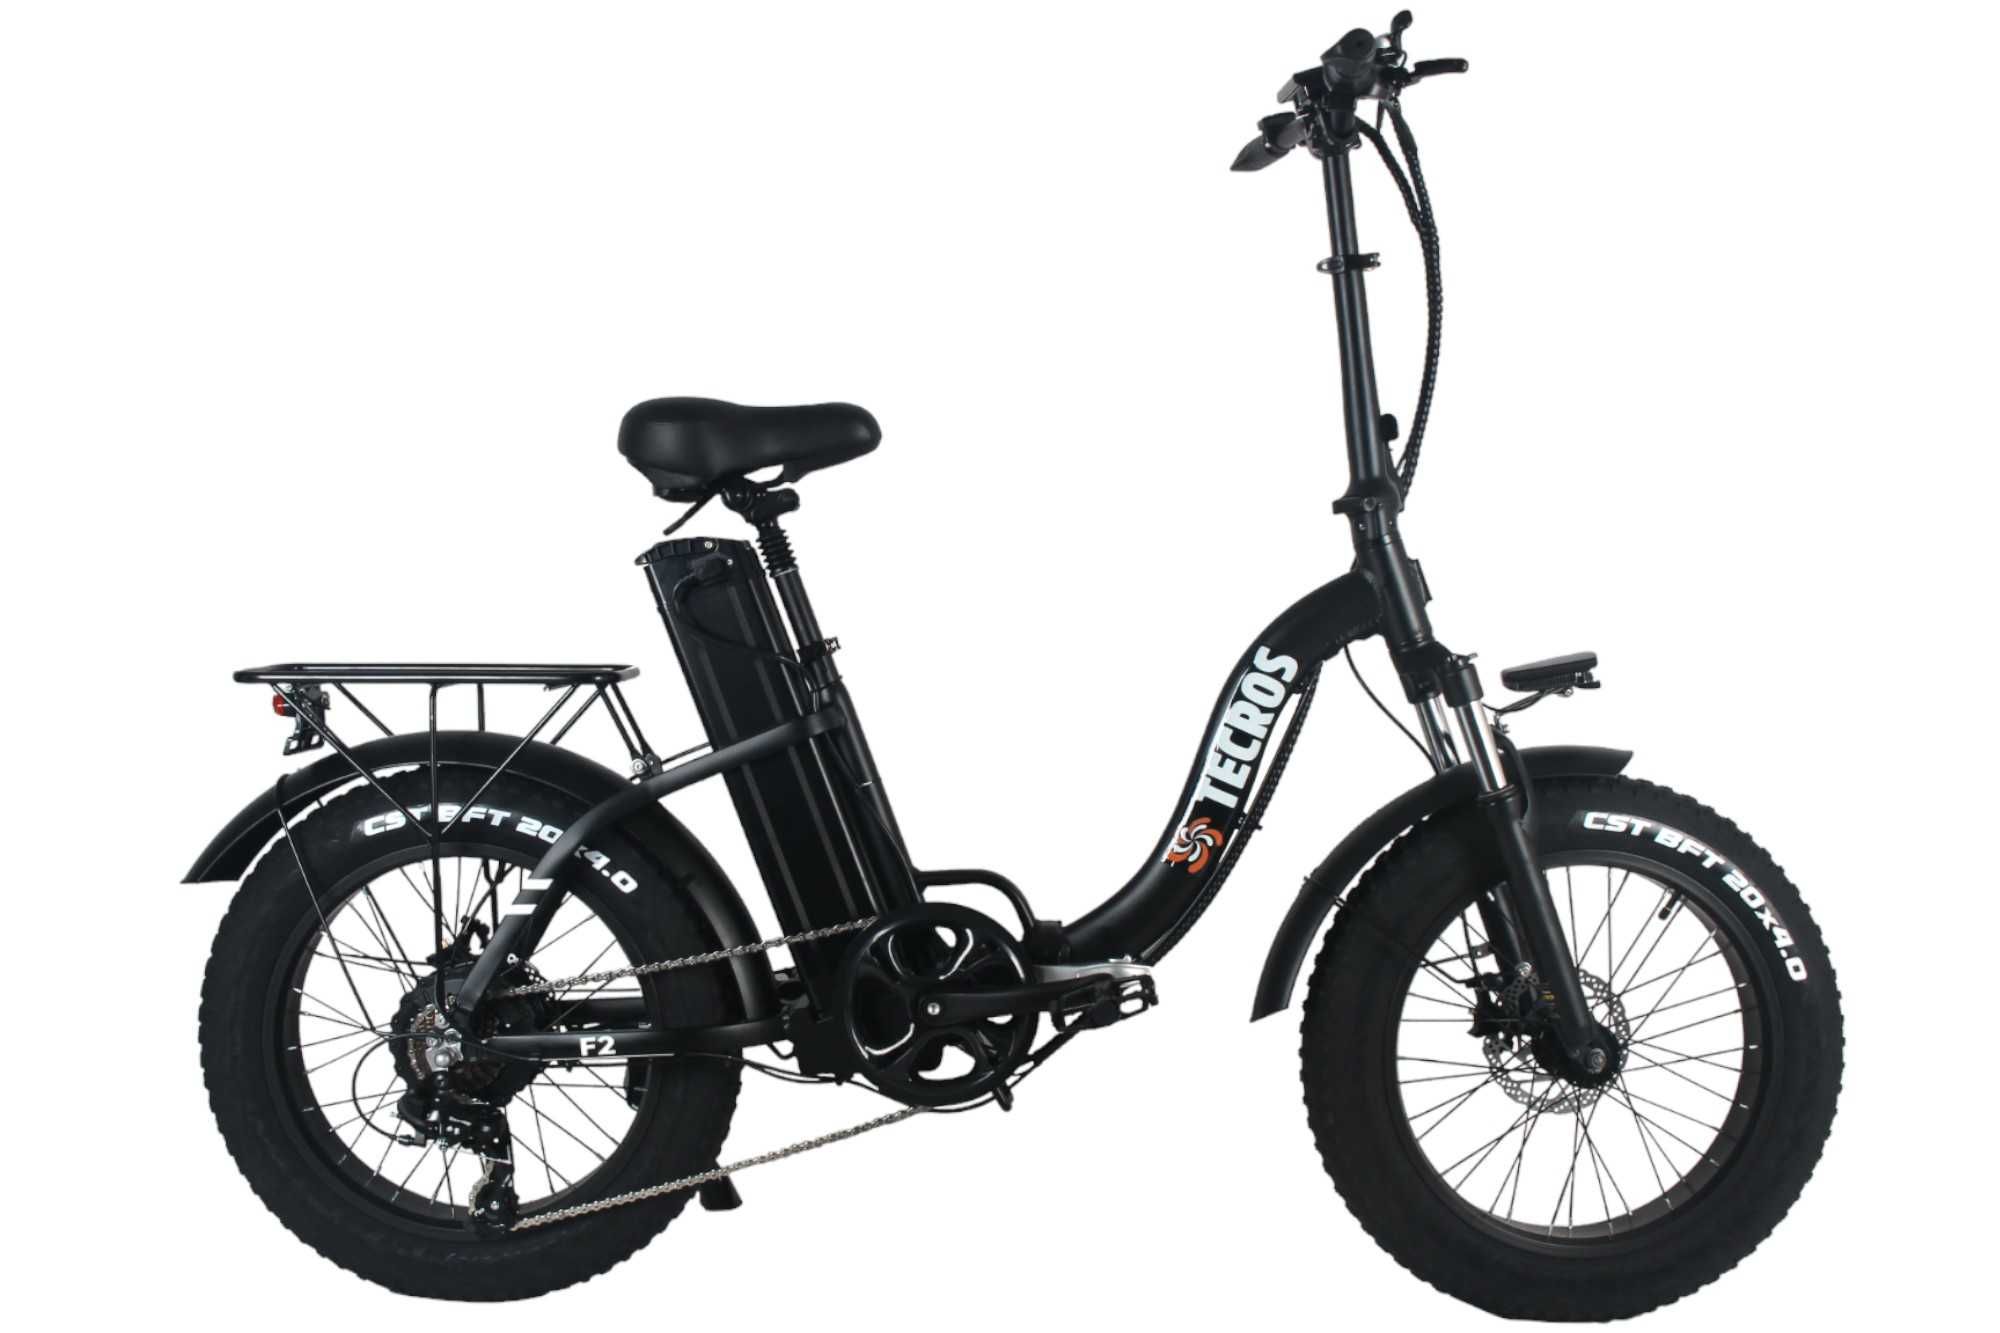 Электровелосипед fatbike Tecros F1 48v 20ah 750/1000w 20"